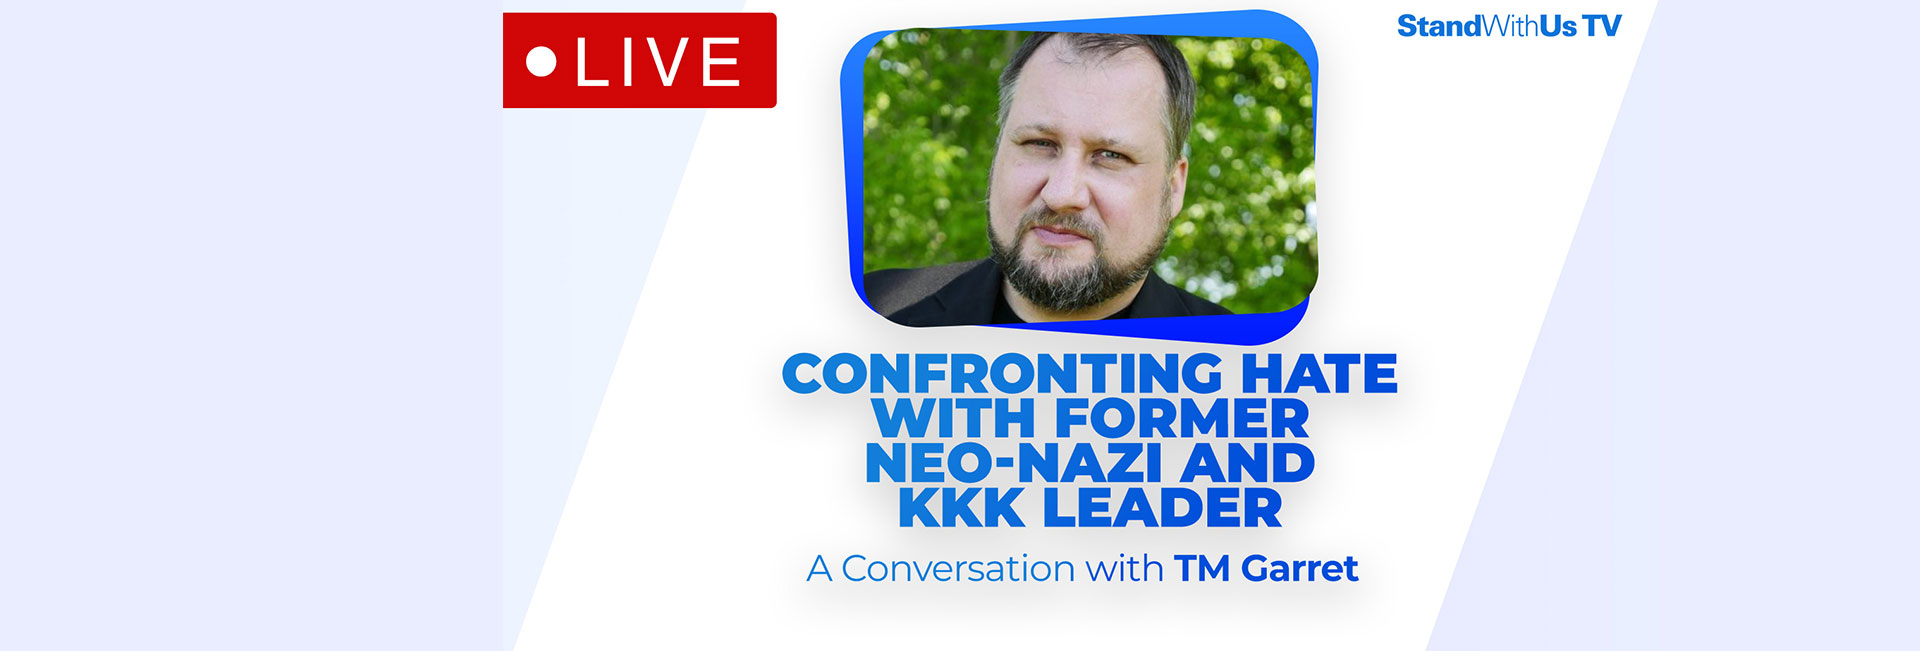 Confronting Hate with Former Neo-Nazi and KKK Leader TM Garret